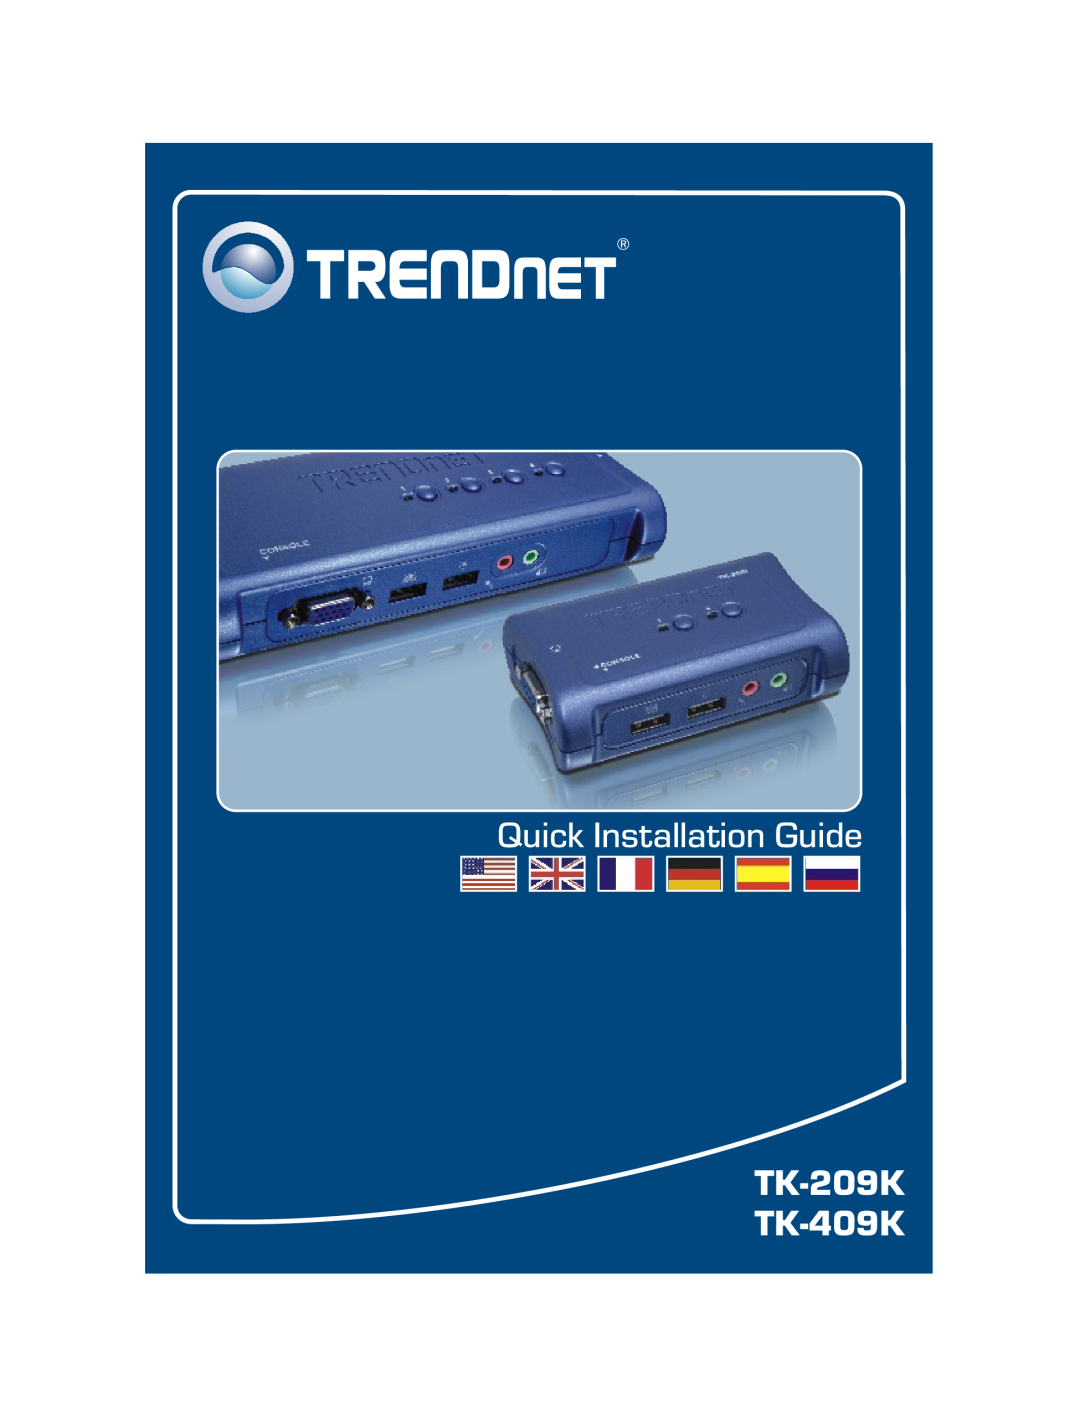 TRENDnet tk-409k, tk-209k manual Quick Installation Guide, TK-209K TK-409K 